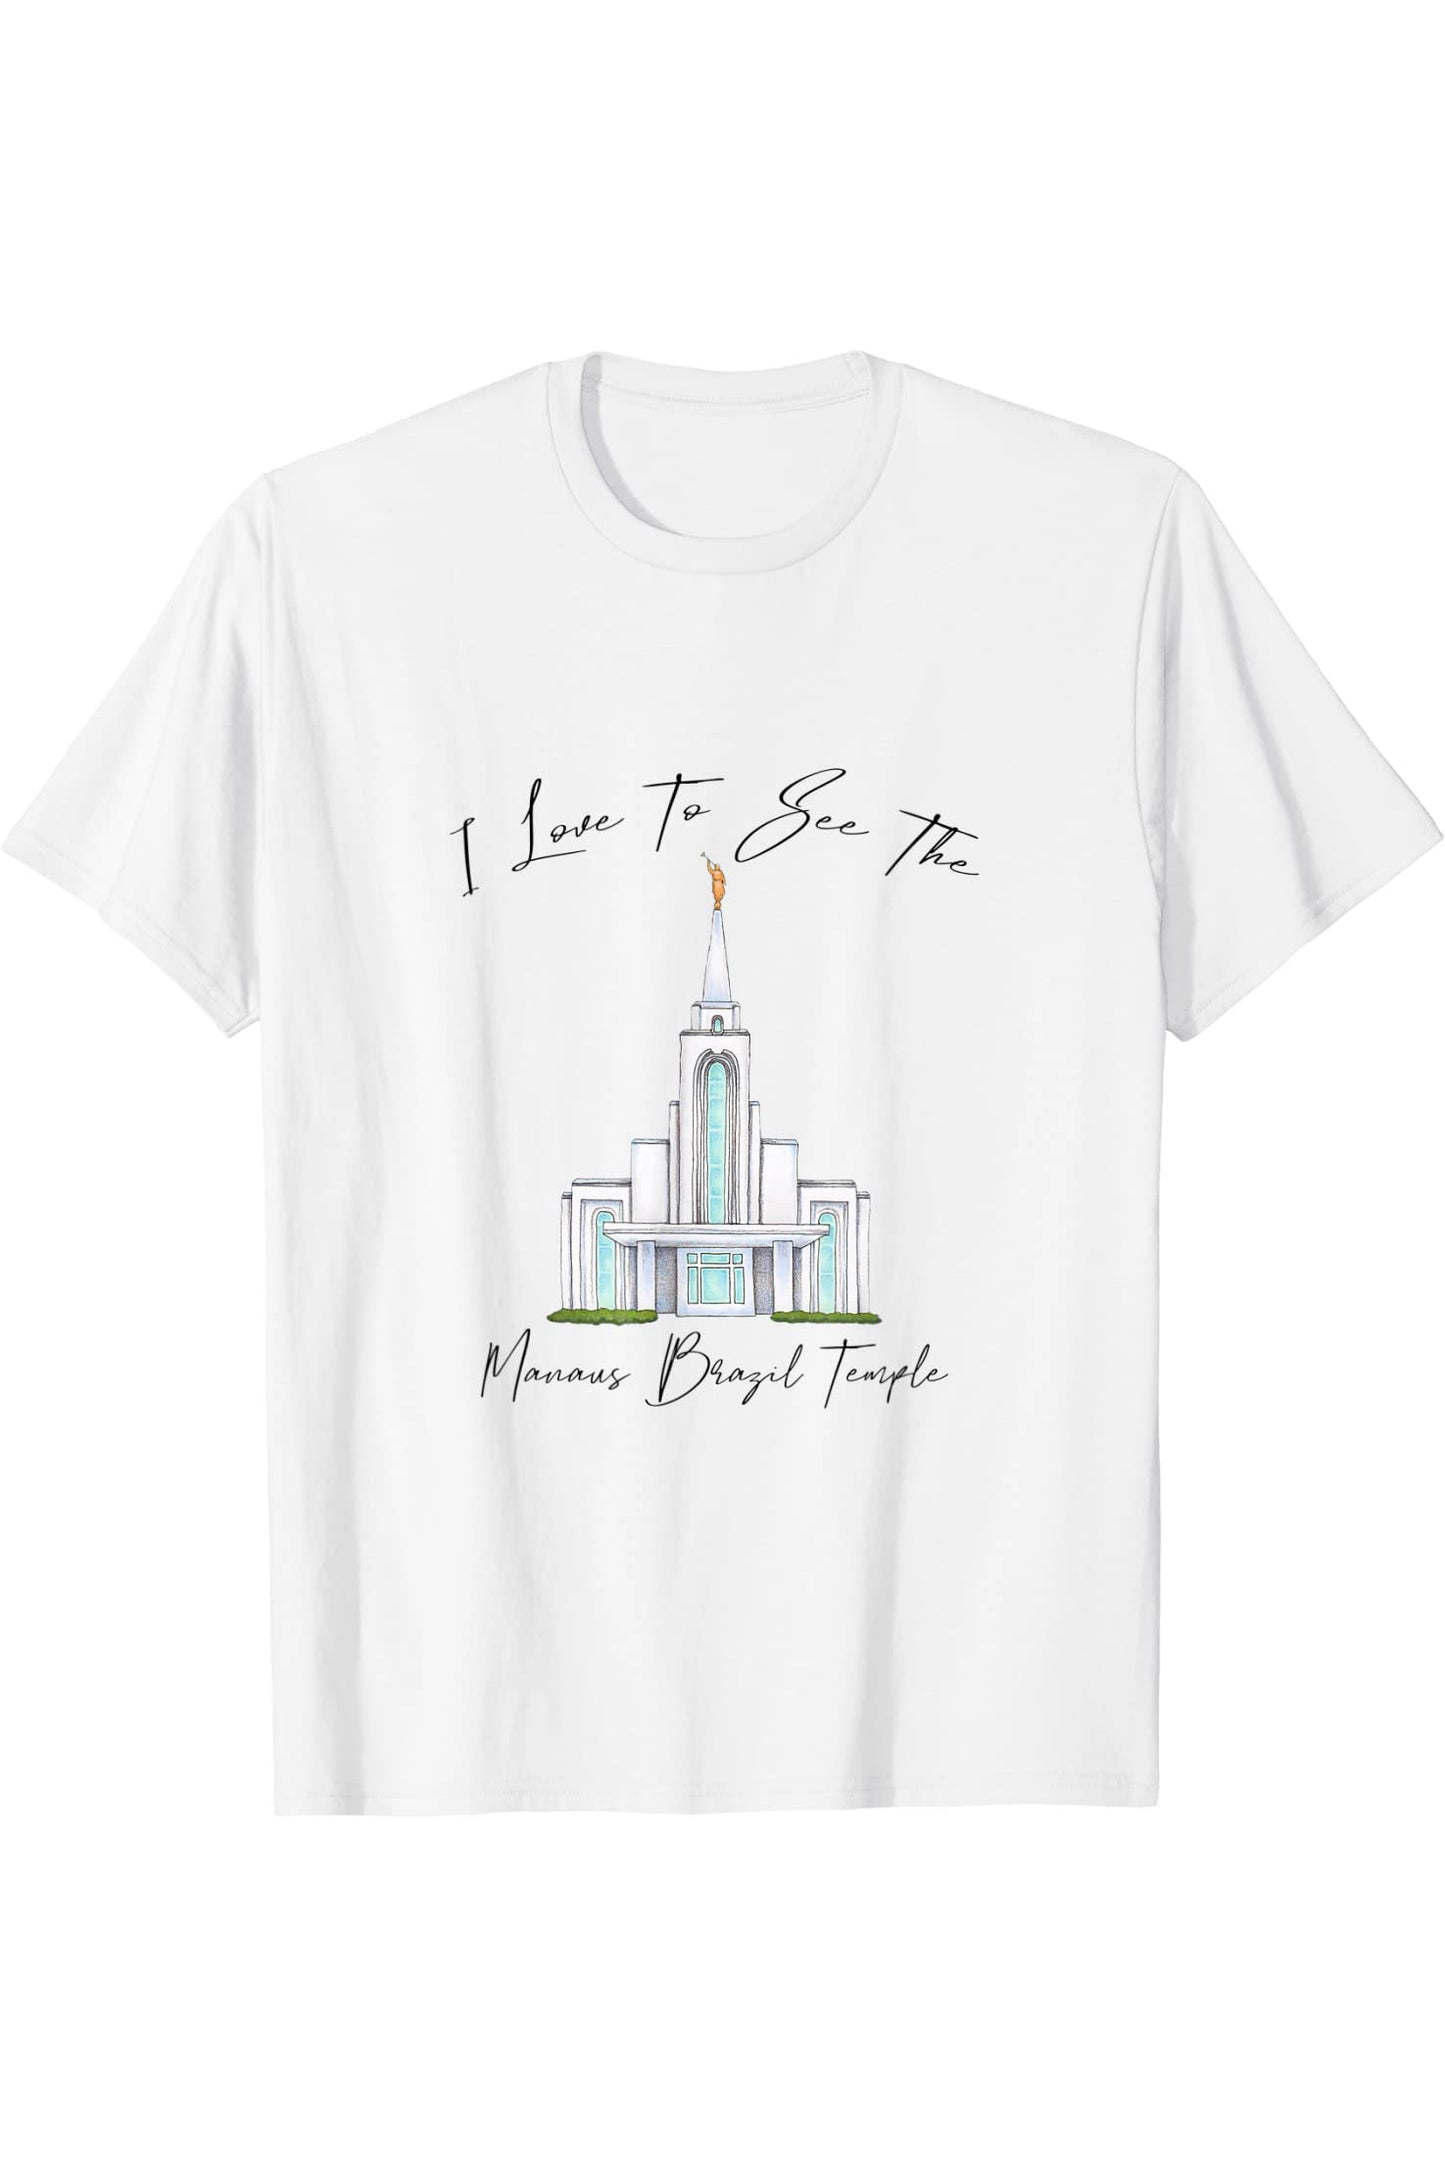 Manaus Brazil Temple T-Shirt - Calligraphy Style (English) US